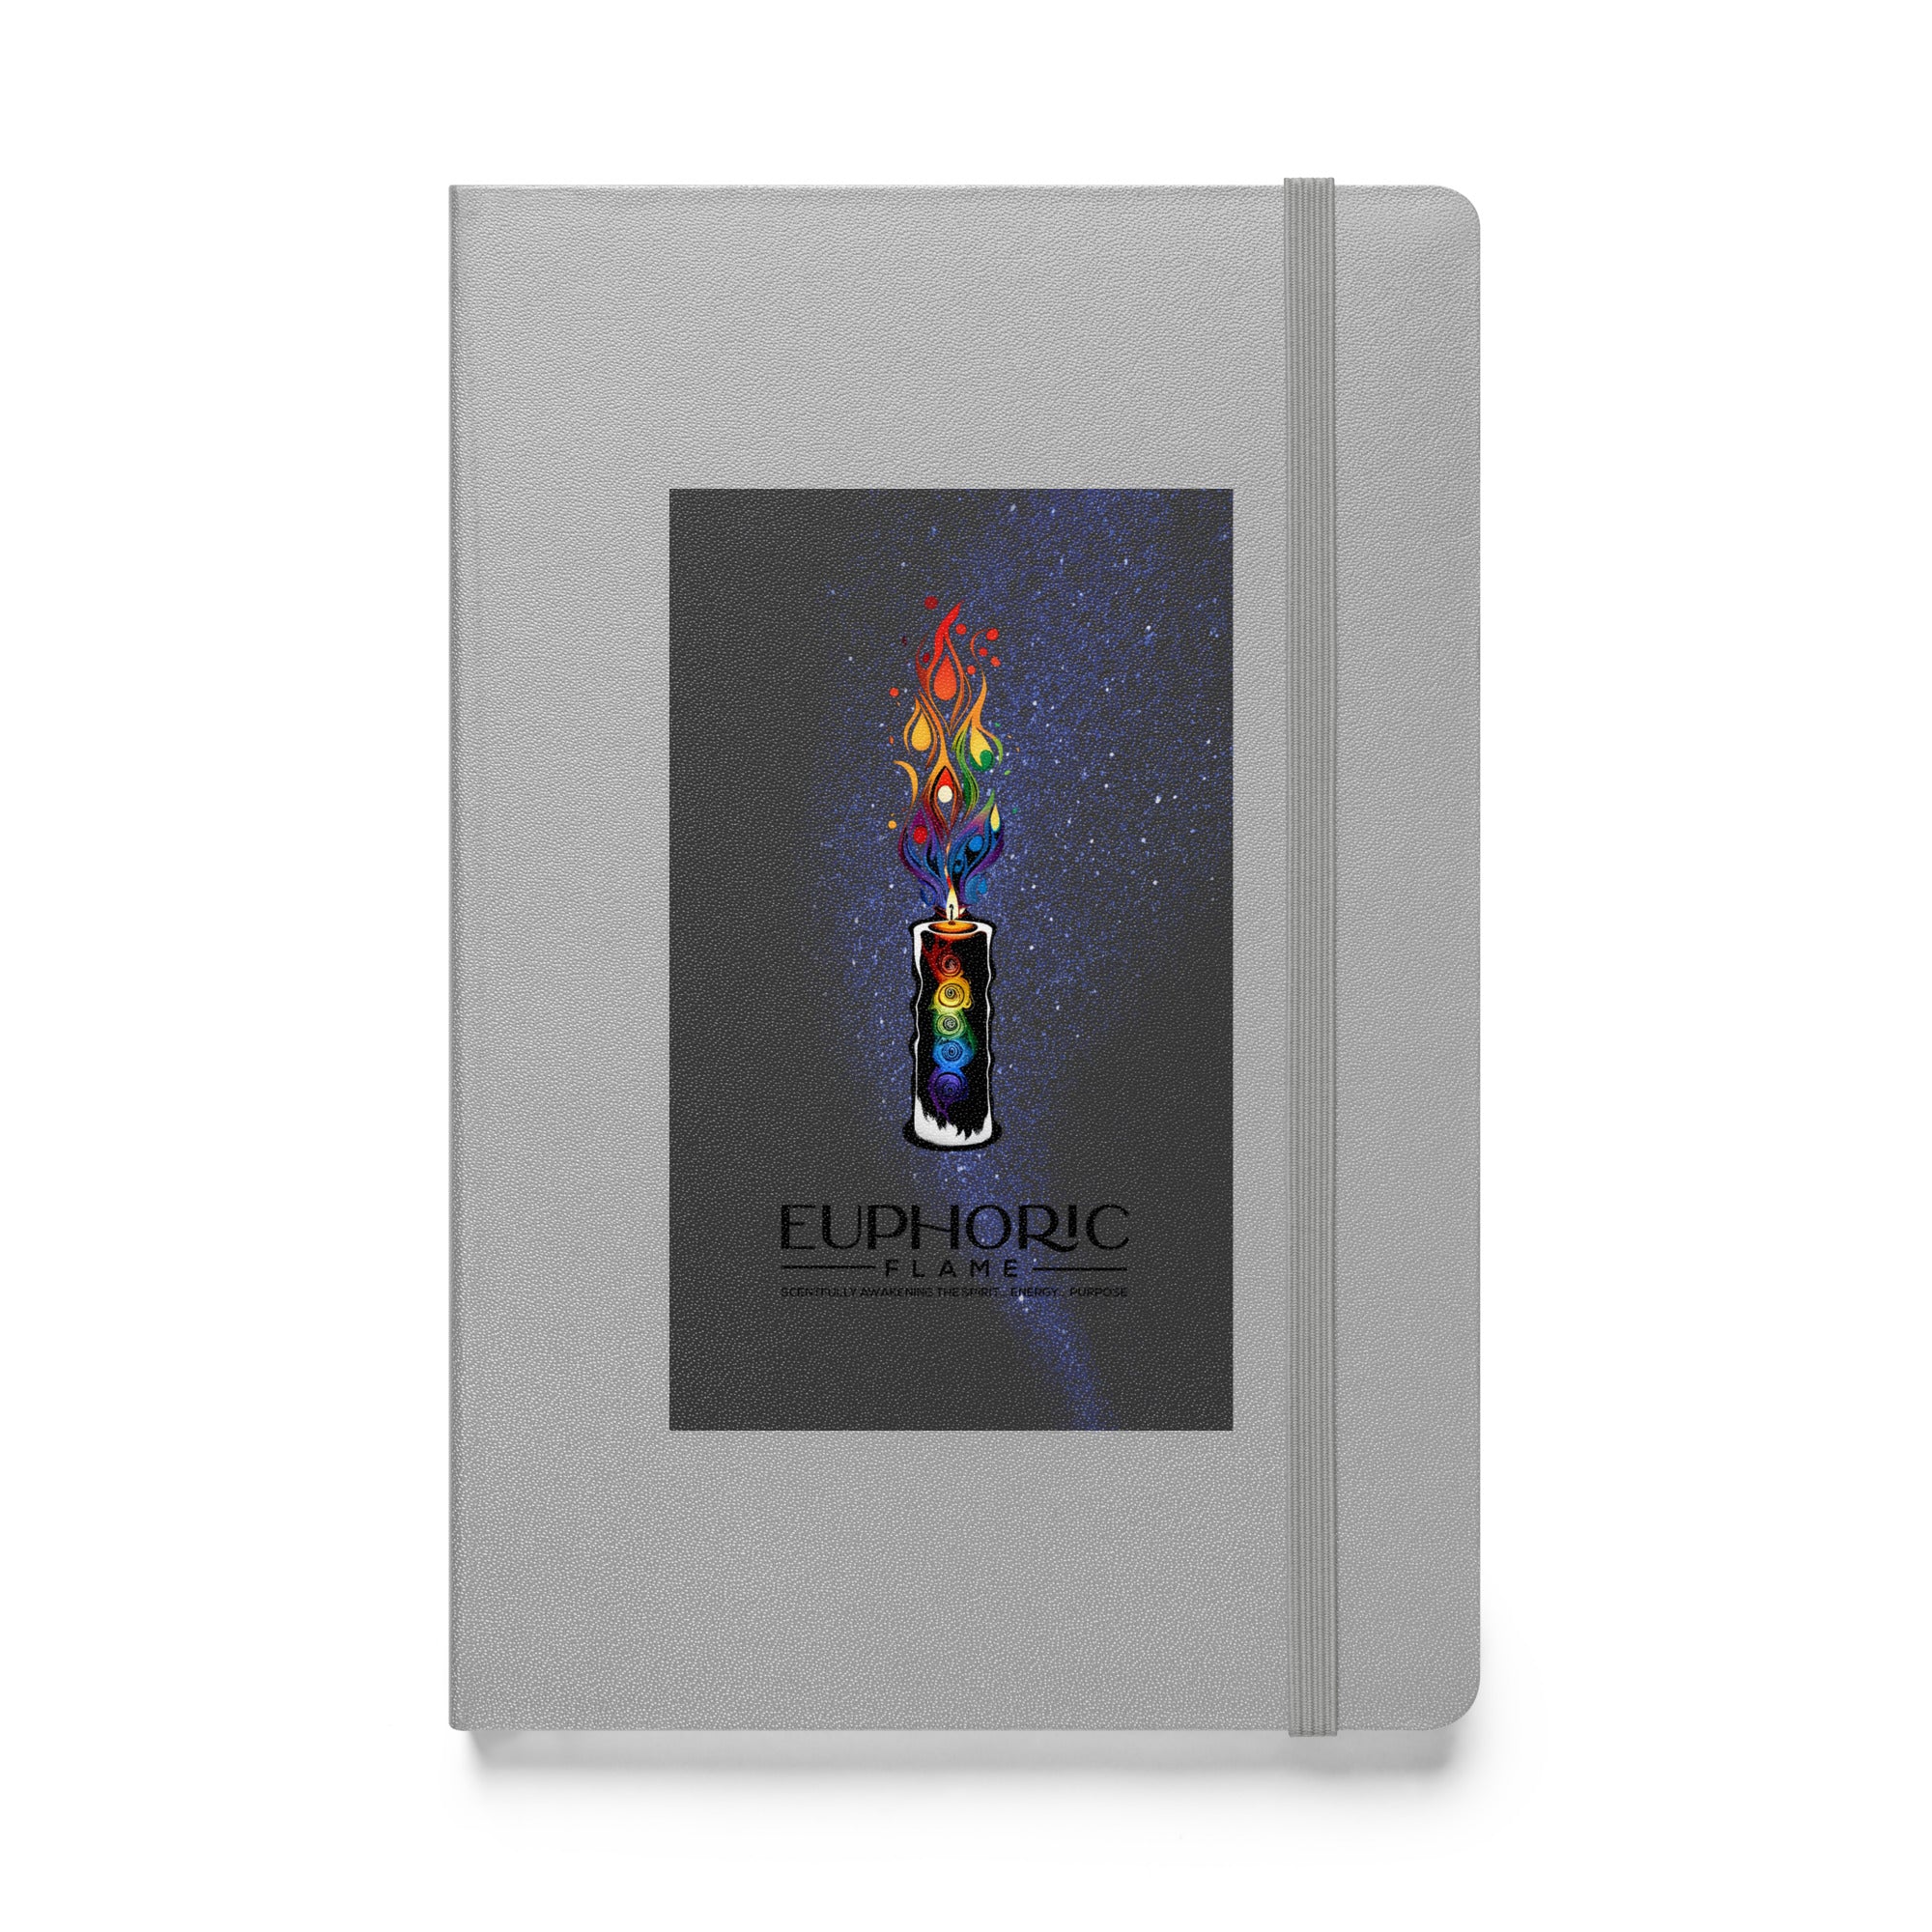 Euphoric Flame Hardcover bound notebook